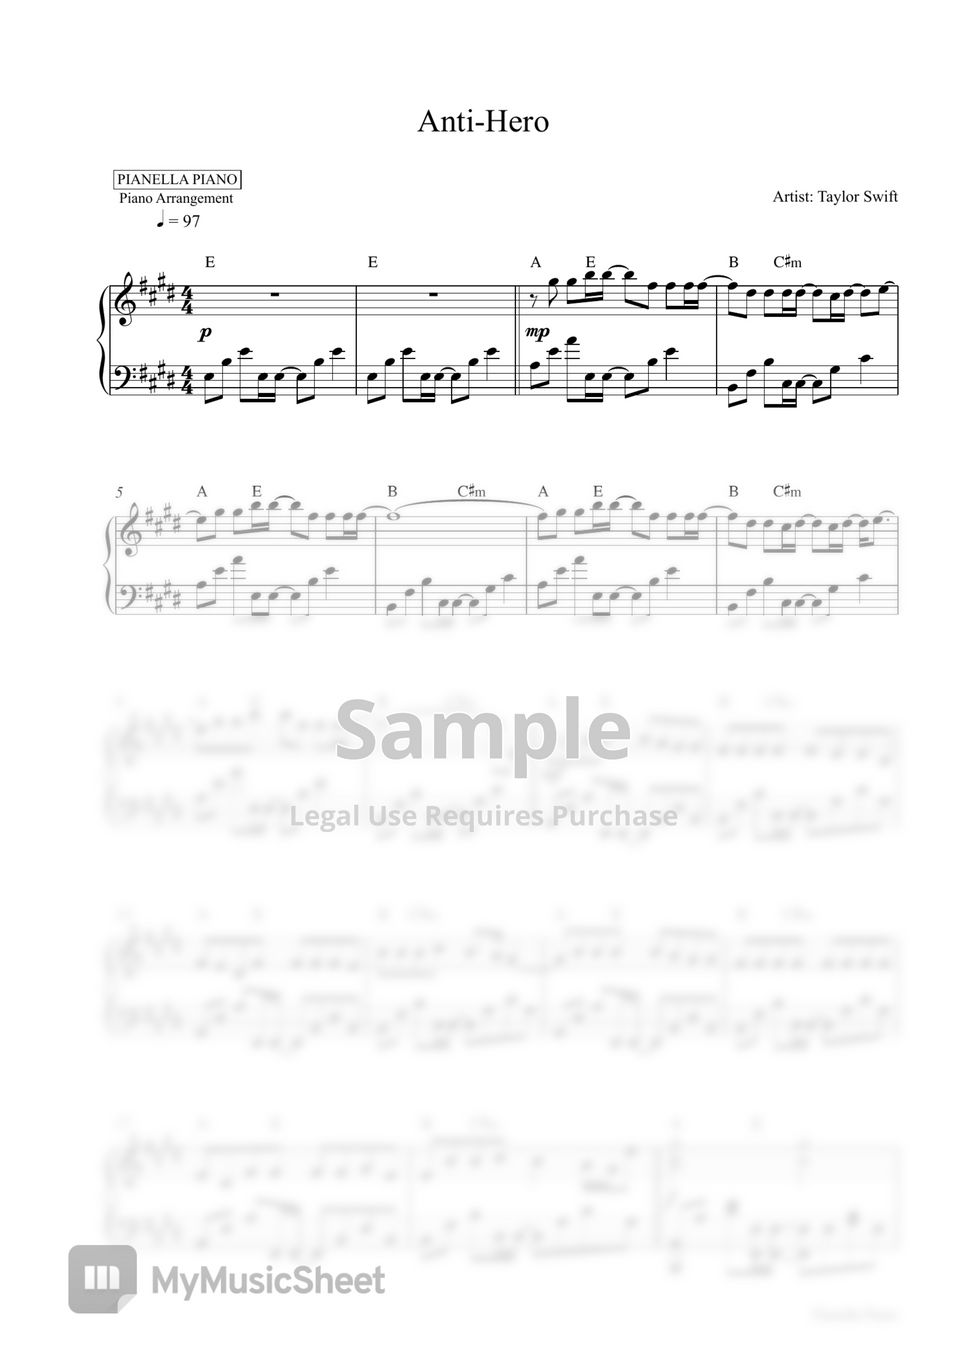 Taylor Swift - Anti-Hero (Piano Sheet) by Pianella Piano